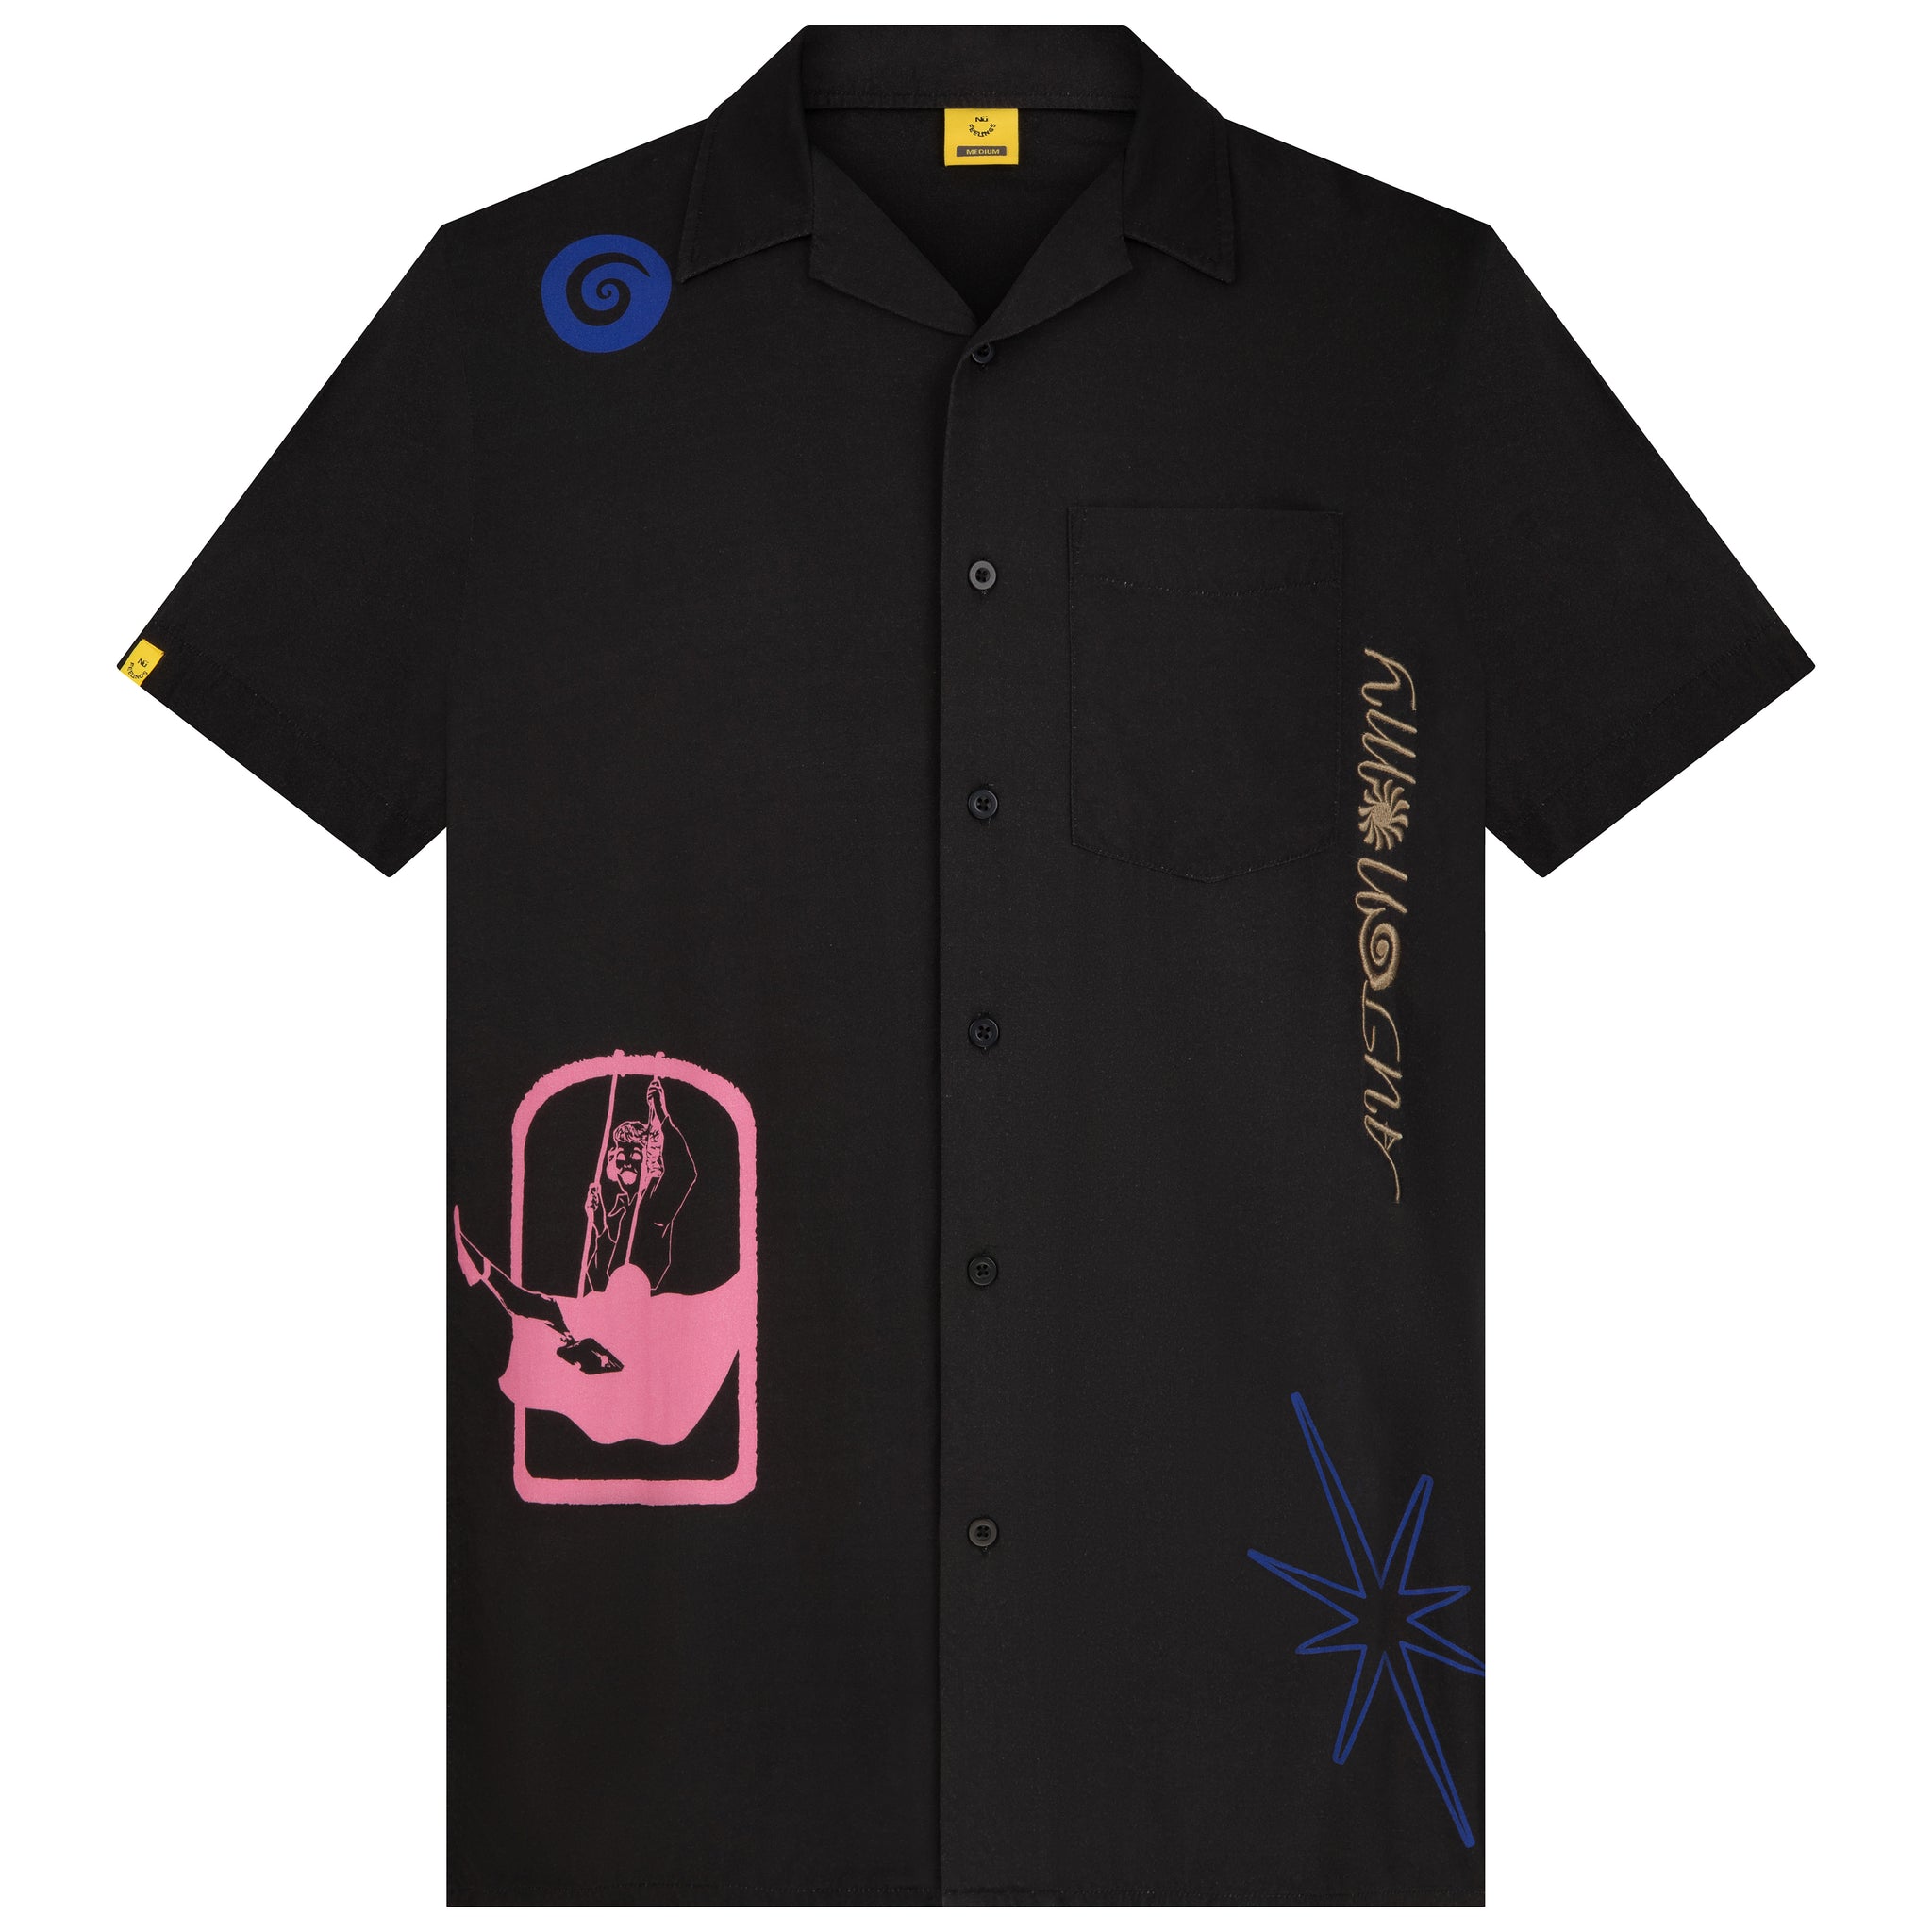 Autonomy Bowling Shirt - Vintage Black Overdye